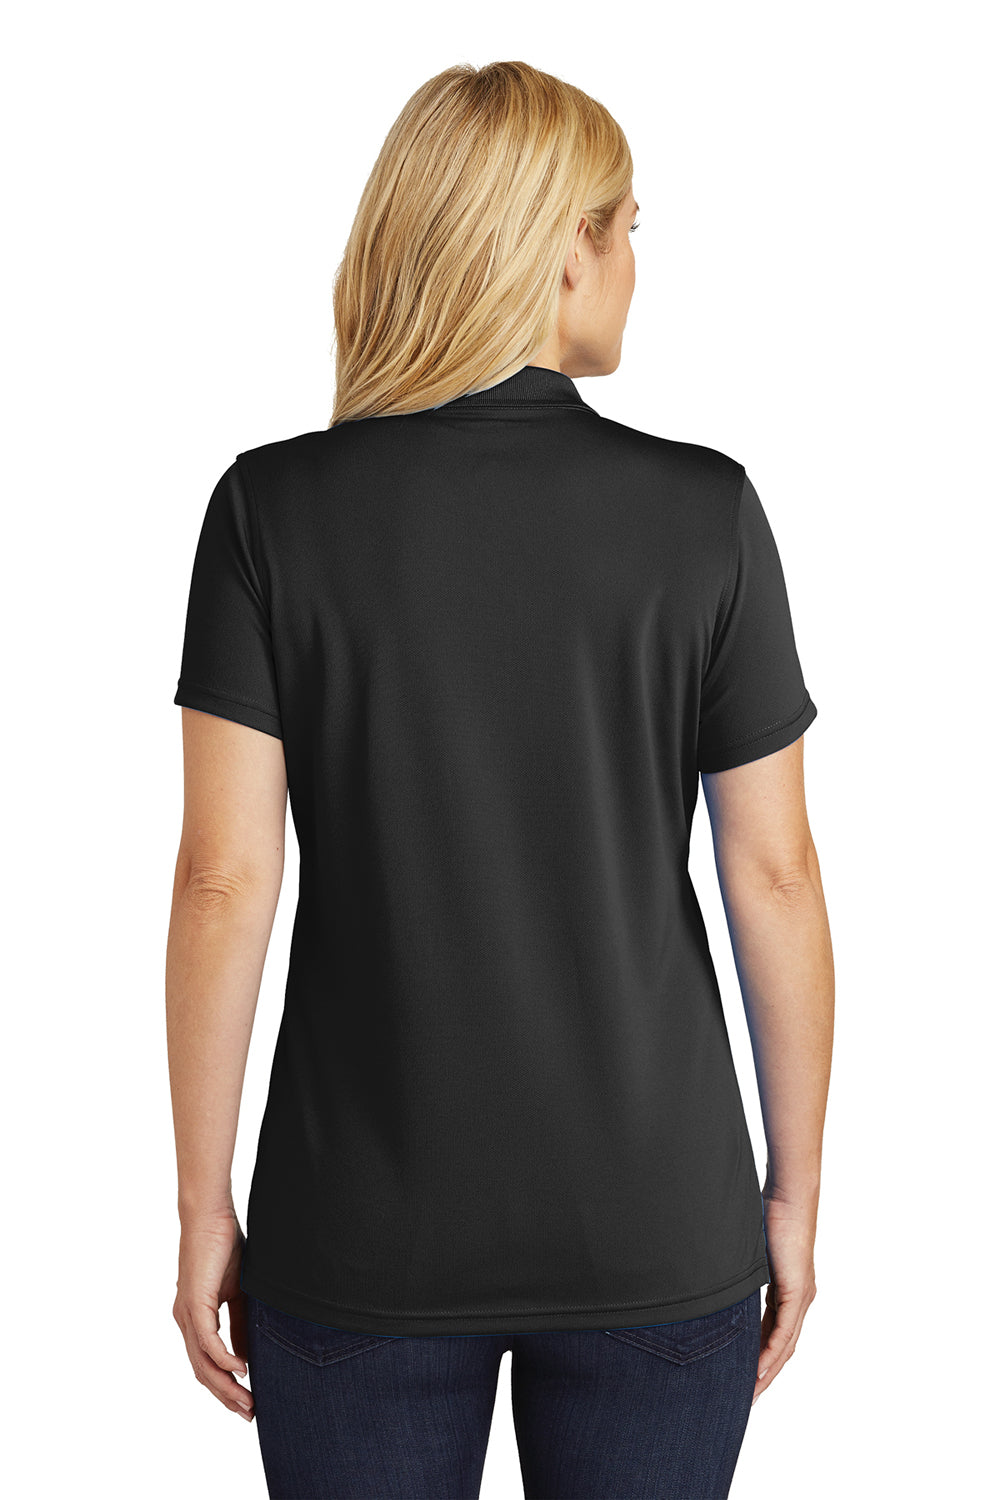 Port Authority LK110 Womens Dry Zone Moisture Wicking Short Sleeve Polo Shirt Black Back